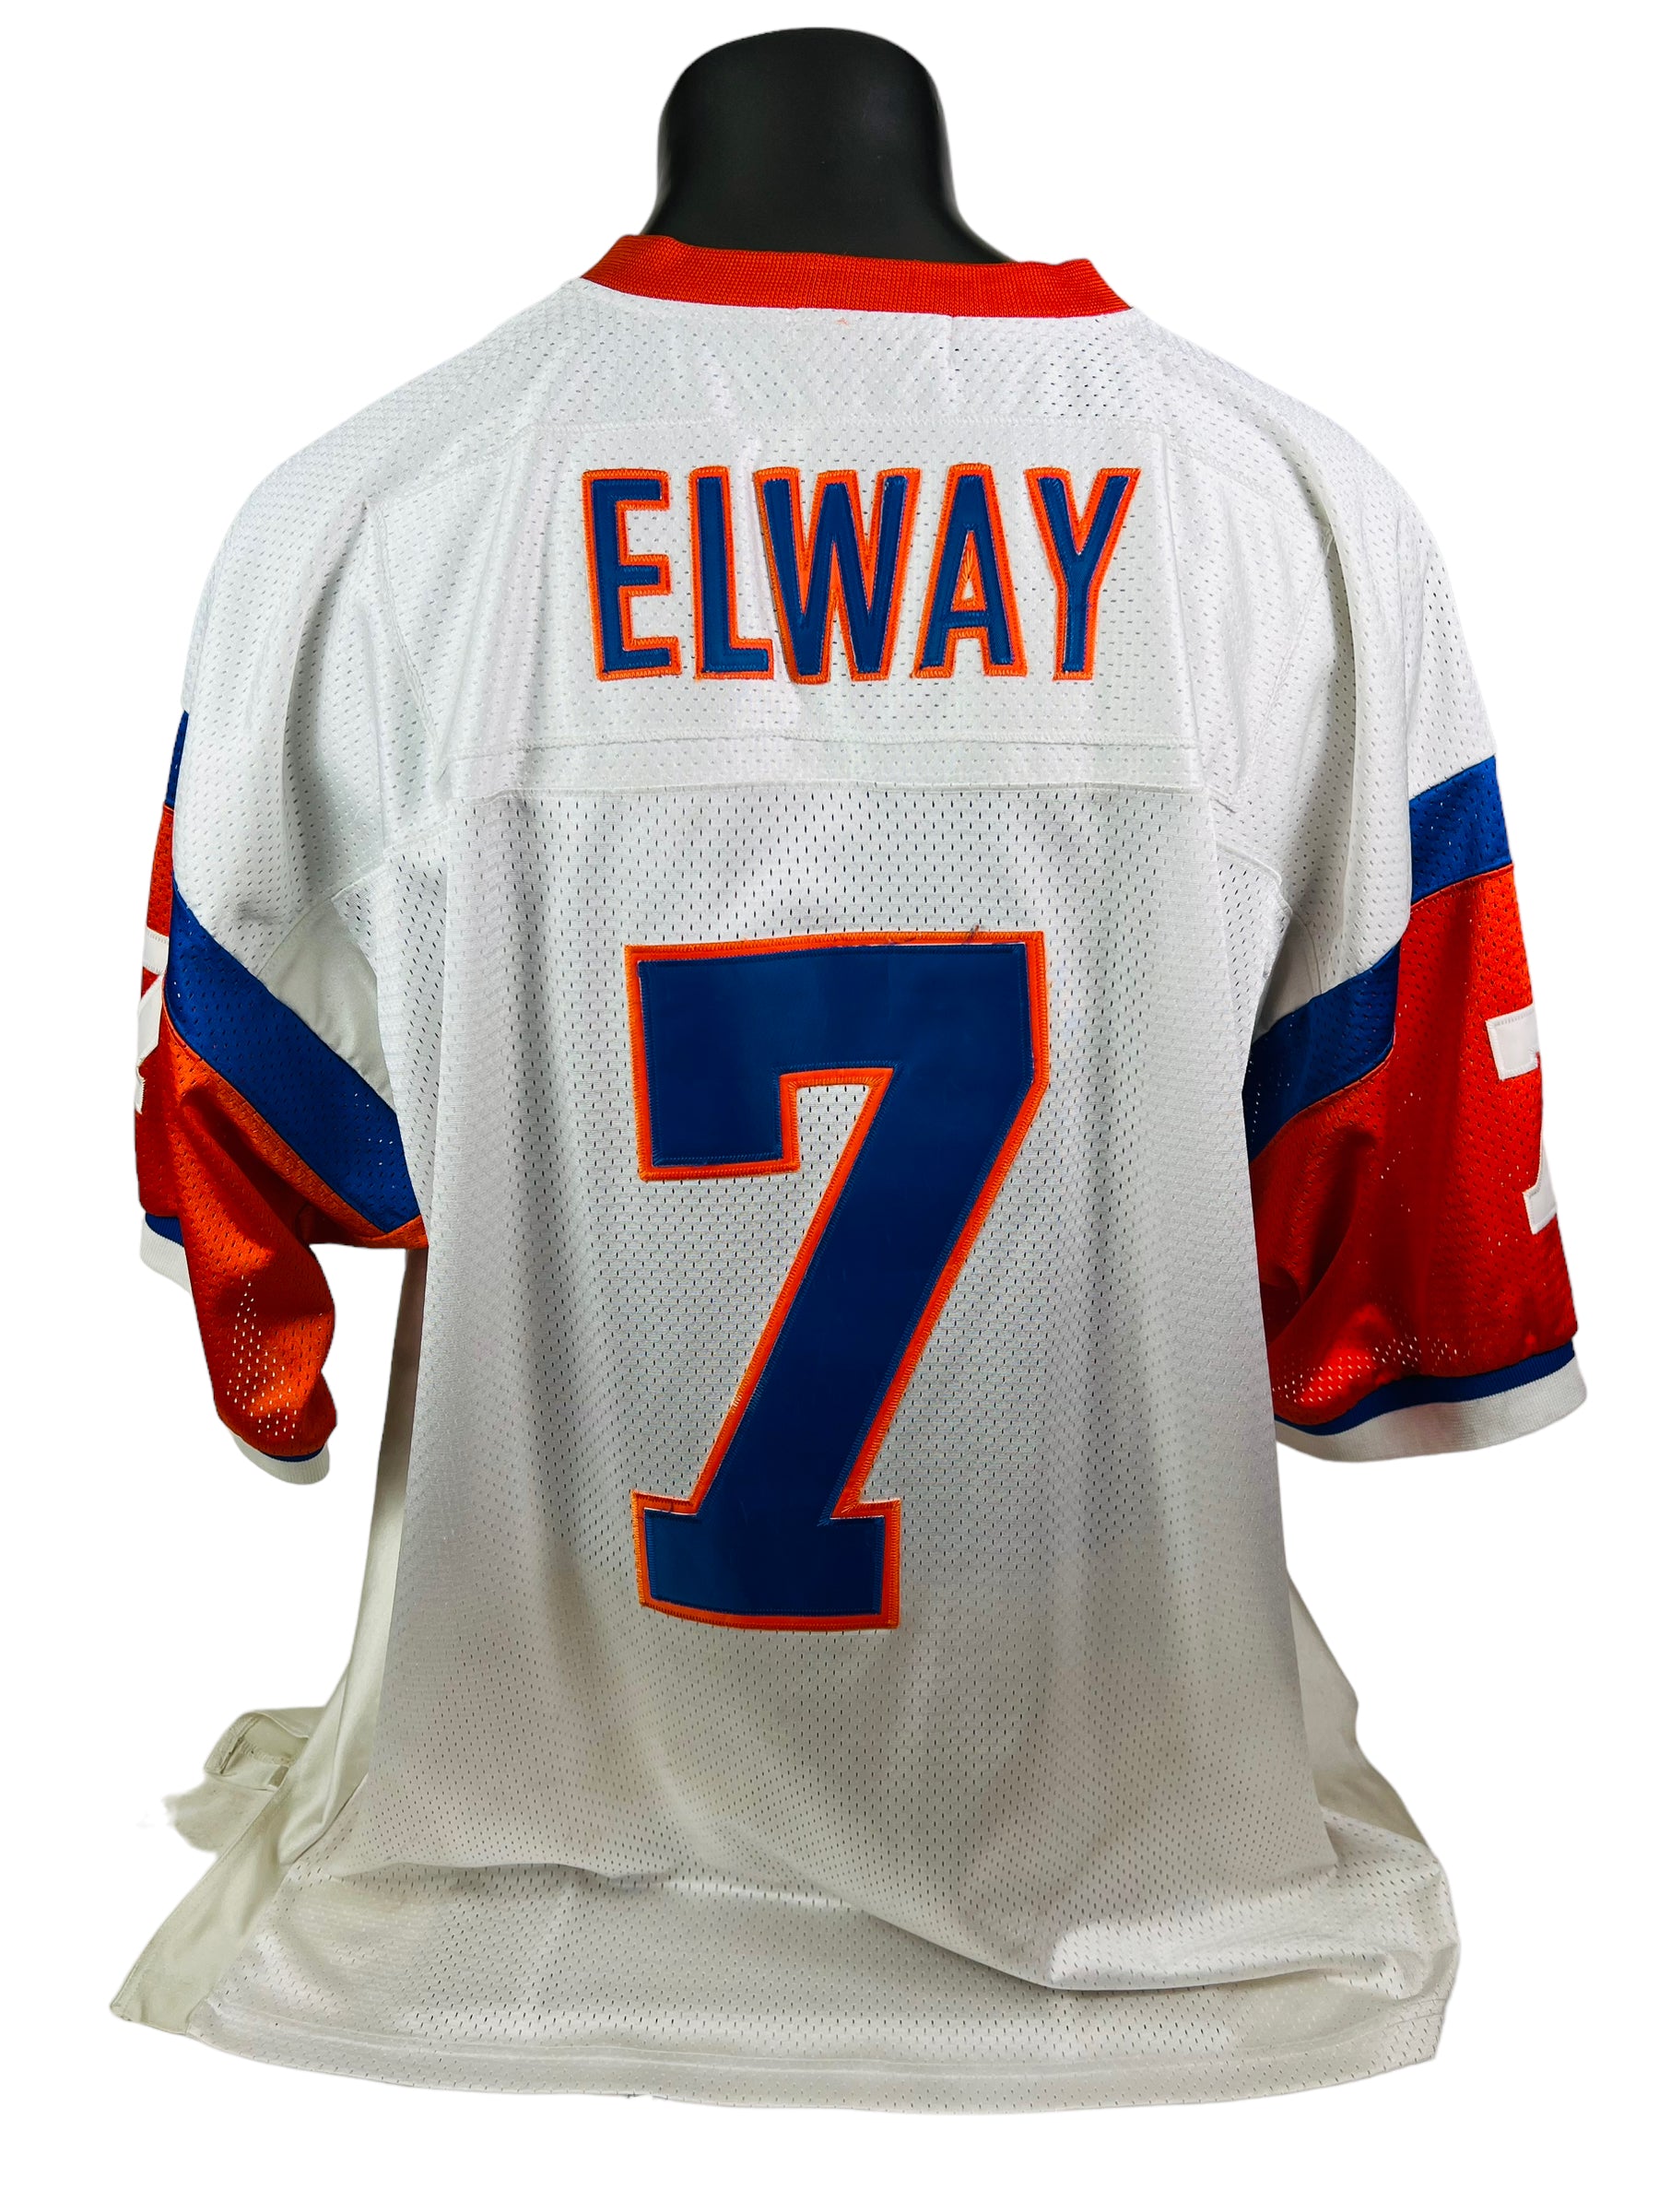 Denver Broncos 75th Anniversary John Elway Jersey  Mitchell and ness  jerseys, John elway, Denver broncos